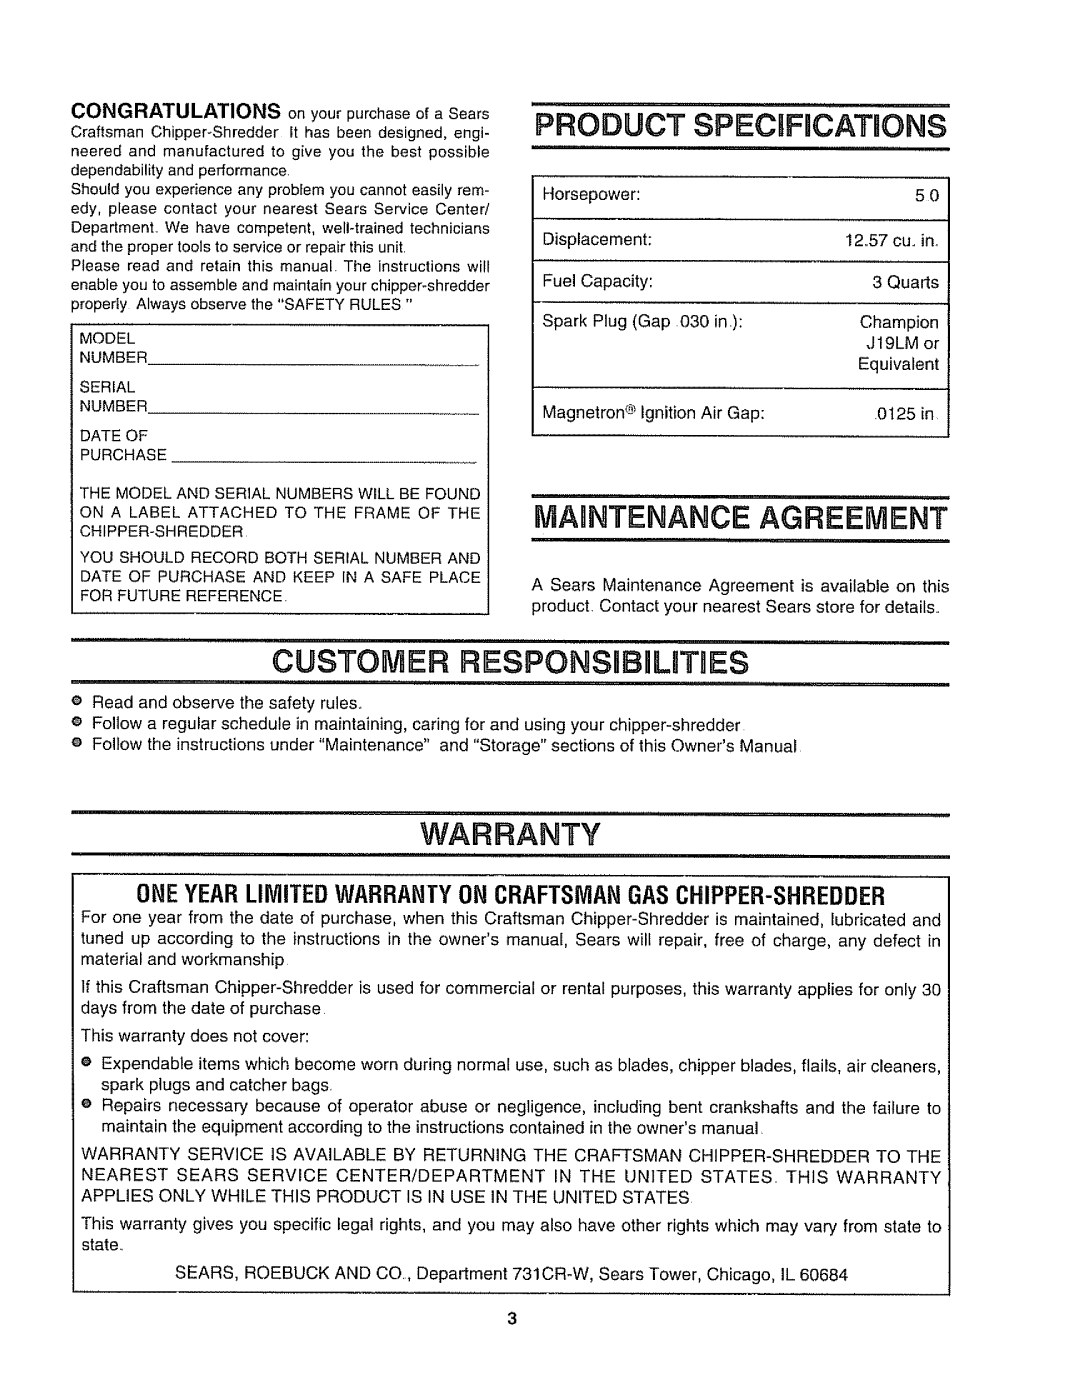 Craftsman 247.797852, 247.797853 manual Madntenance Agreement, CUSTOMER RESPONSUB LBTaES, Product Specrrcatrons, Warranty 